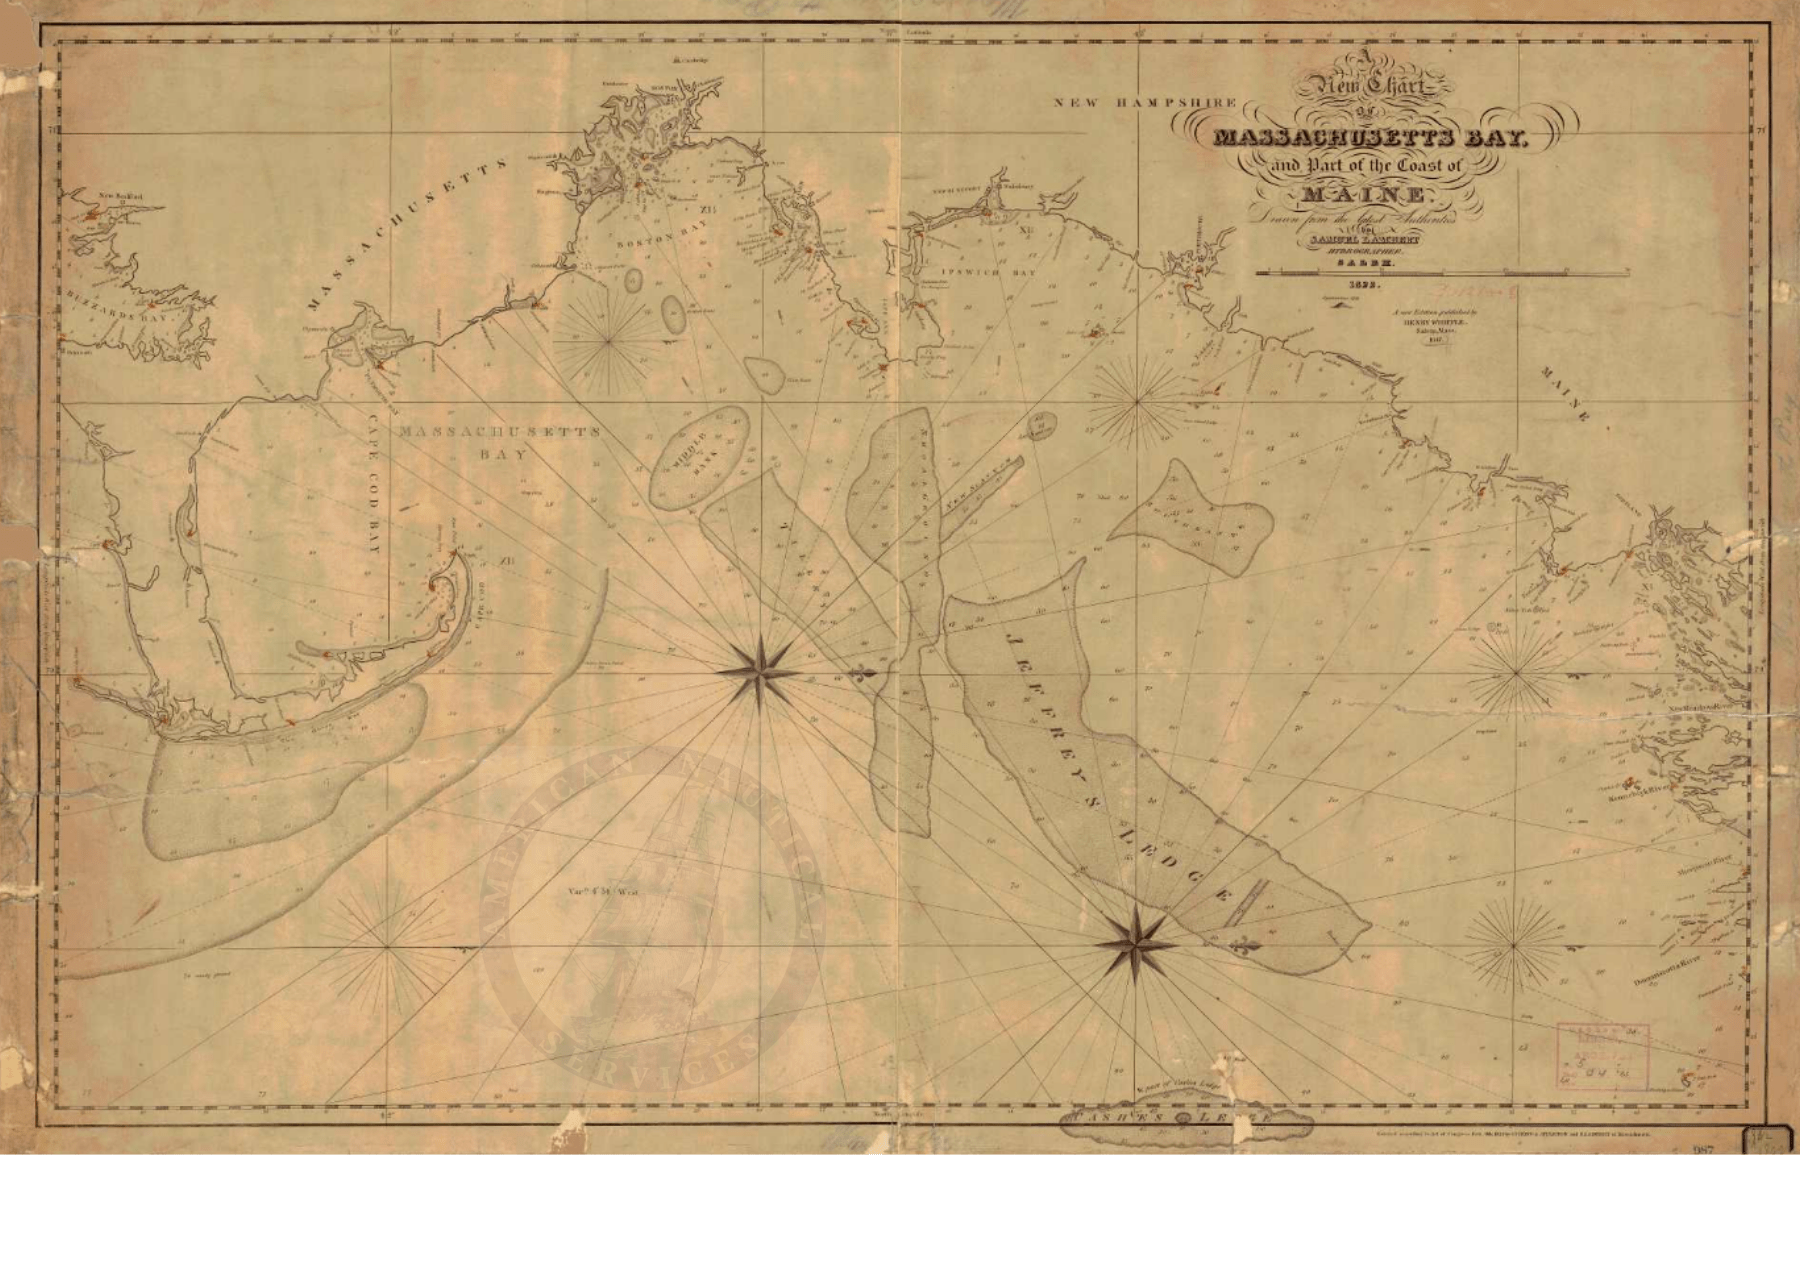 Historical Nautical Chart 00-00-1847: MA, Massachusetts Bay Year 1847